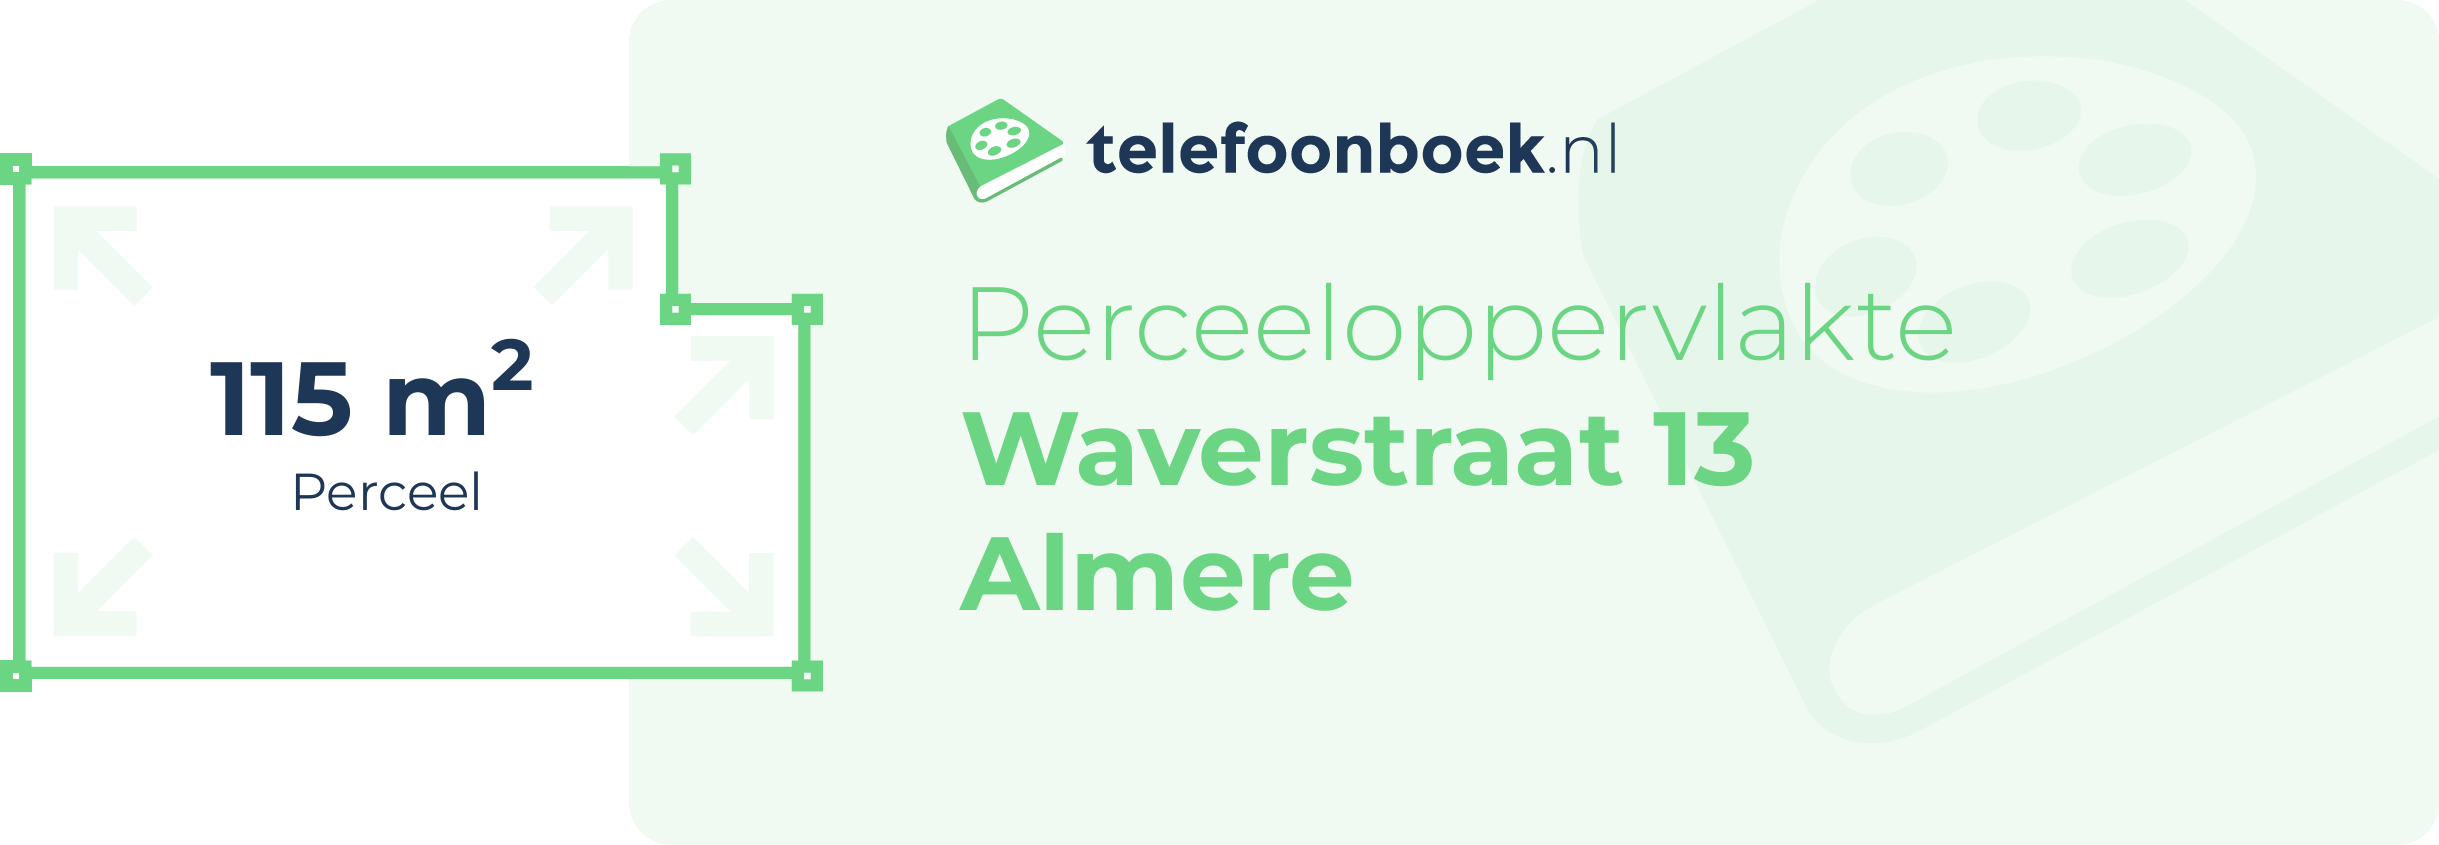 Perceeloppervlakte Waverstraat 13 Almere